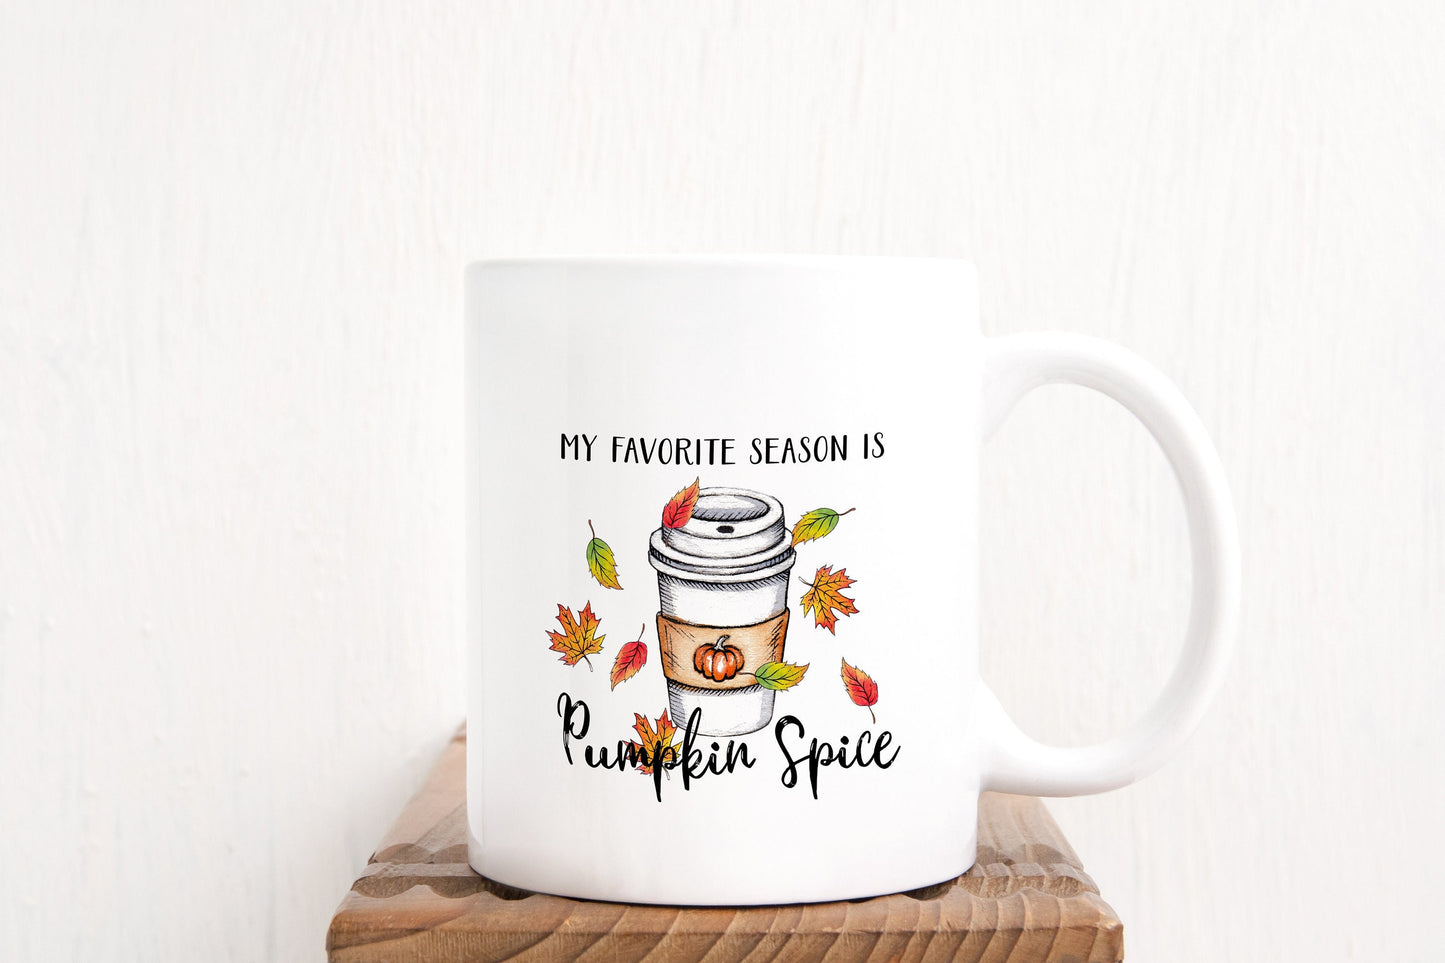 My Favorite Season Is Pumpkin Spice Mug